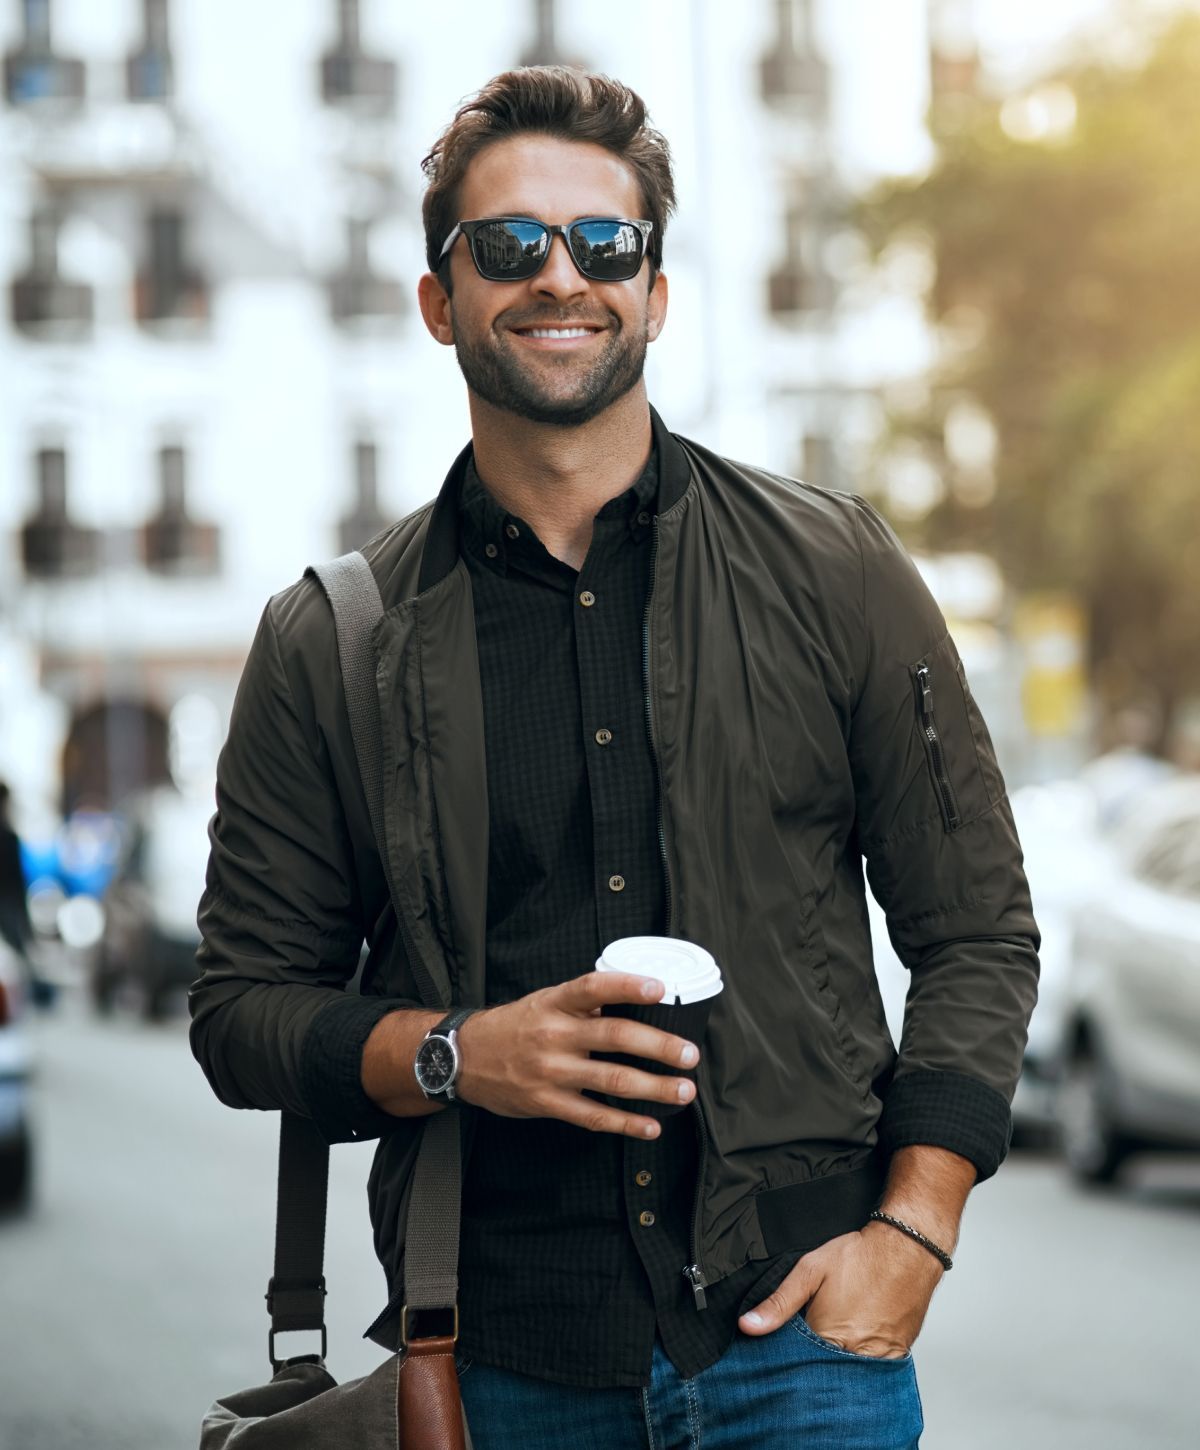 Men's Health Treatments model wearing sunglasses